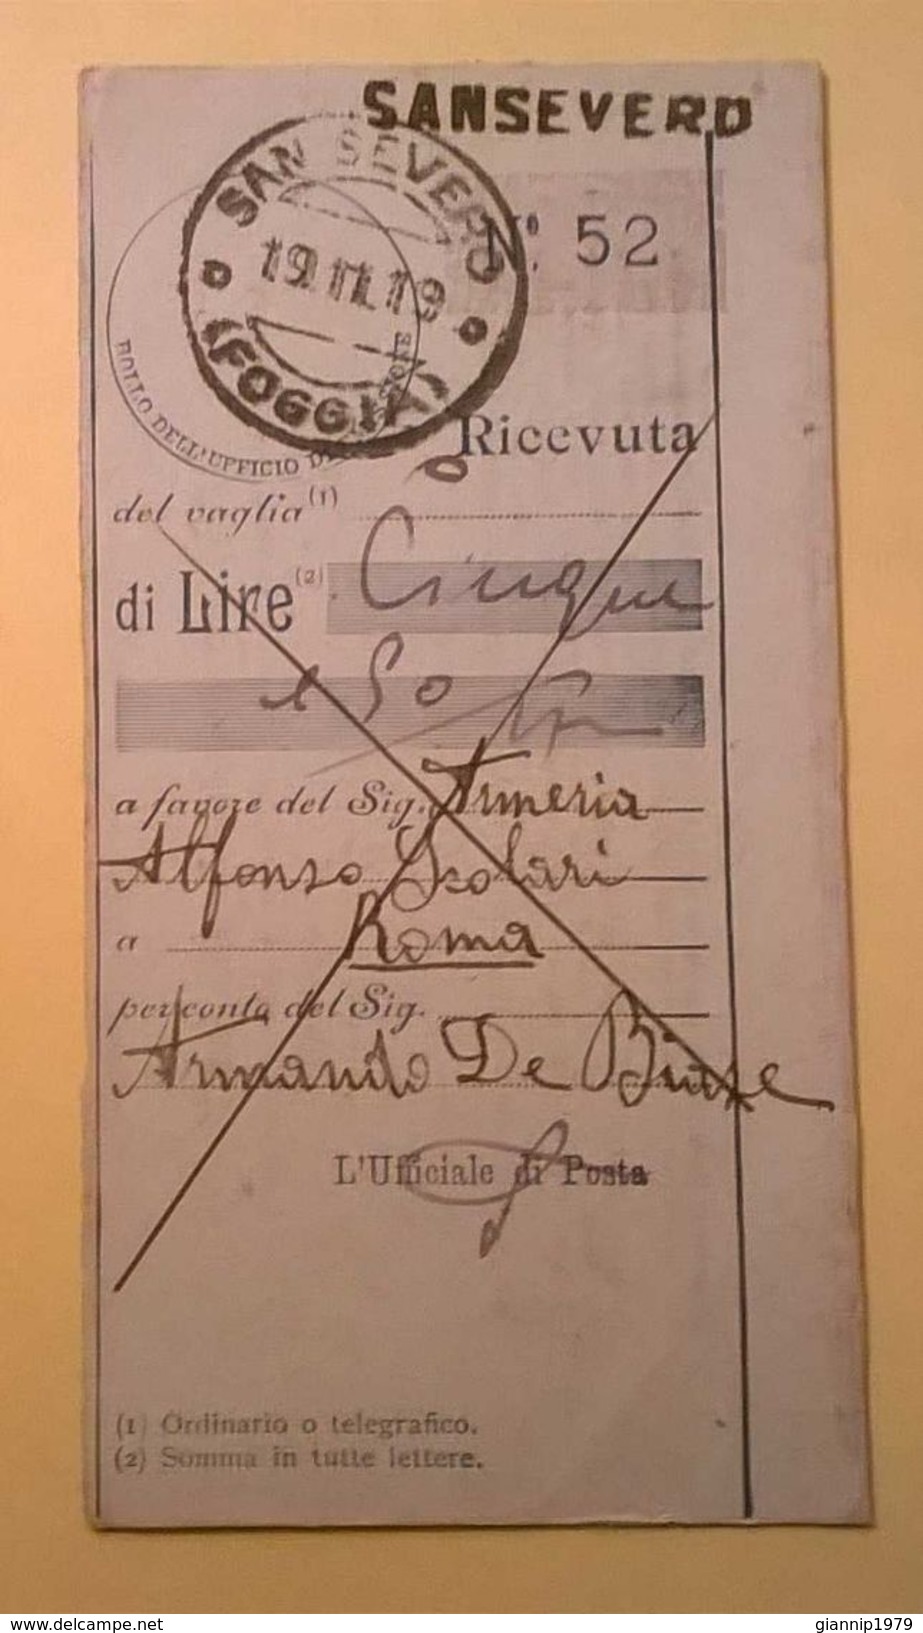 VAGLIA POSTALE RICEVUTA SAN SEVERO FOGGIA 1919 - Strafport Voor Mandaten